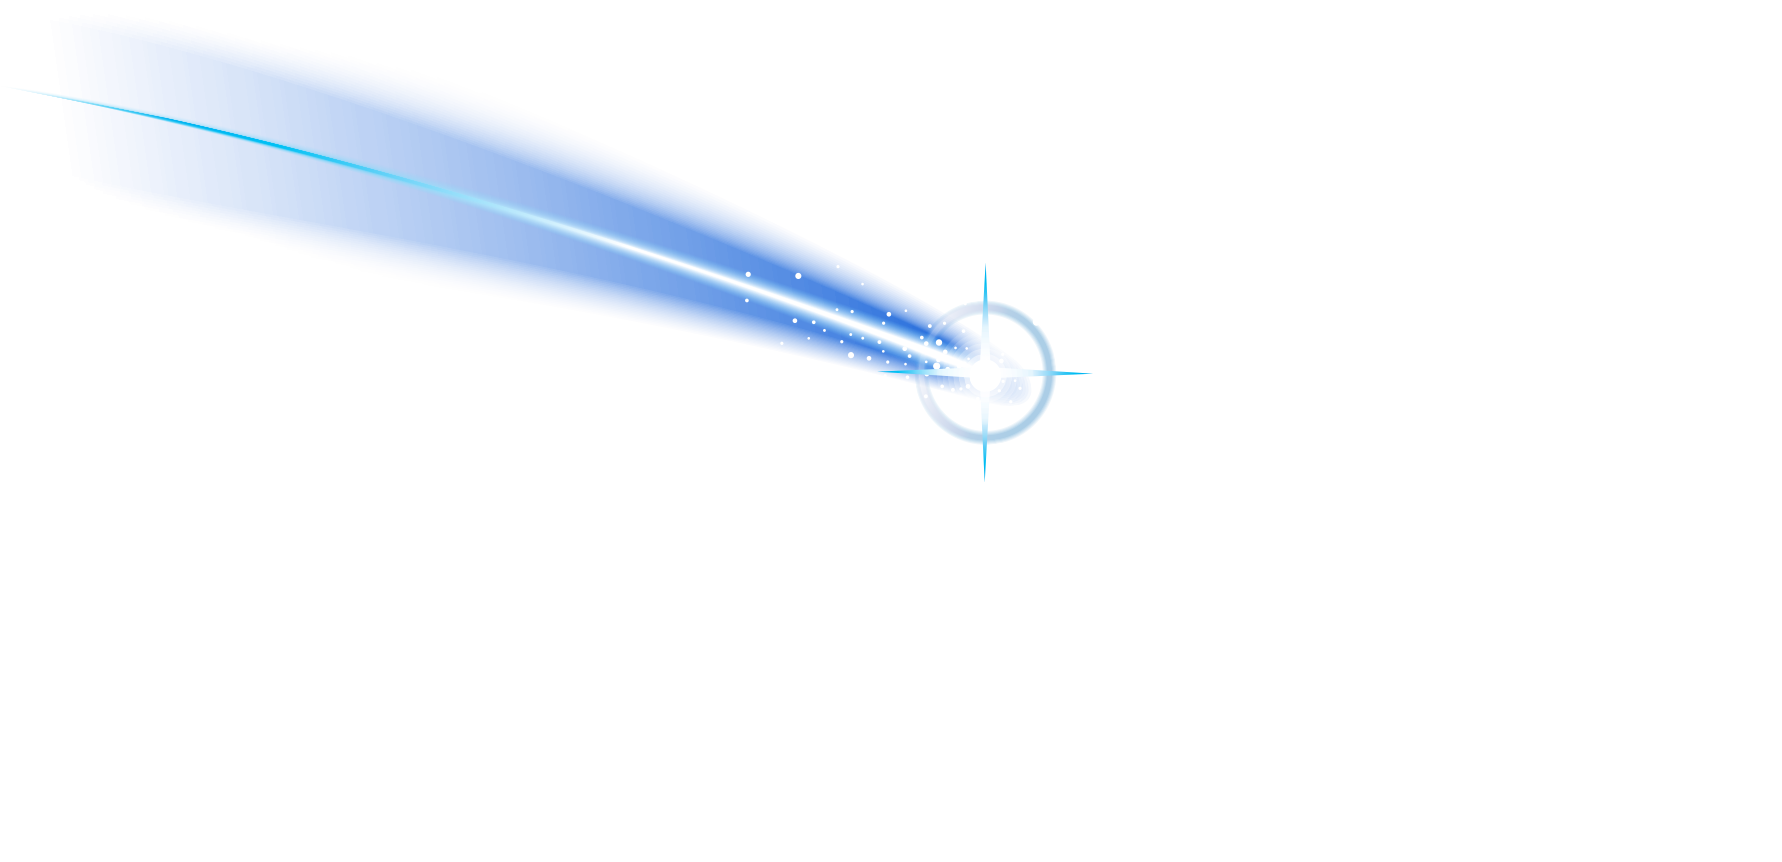 Tokyo Rocket Star Overture